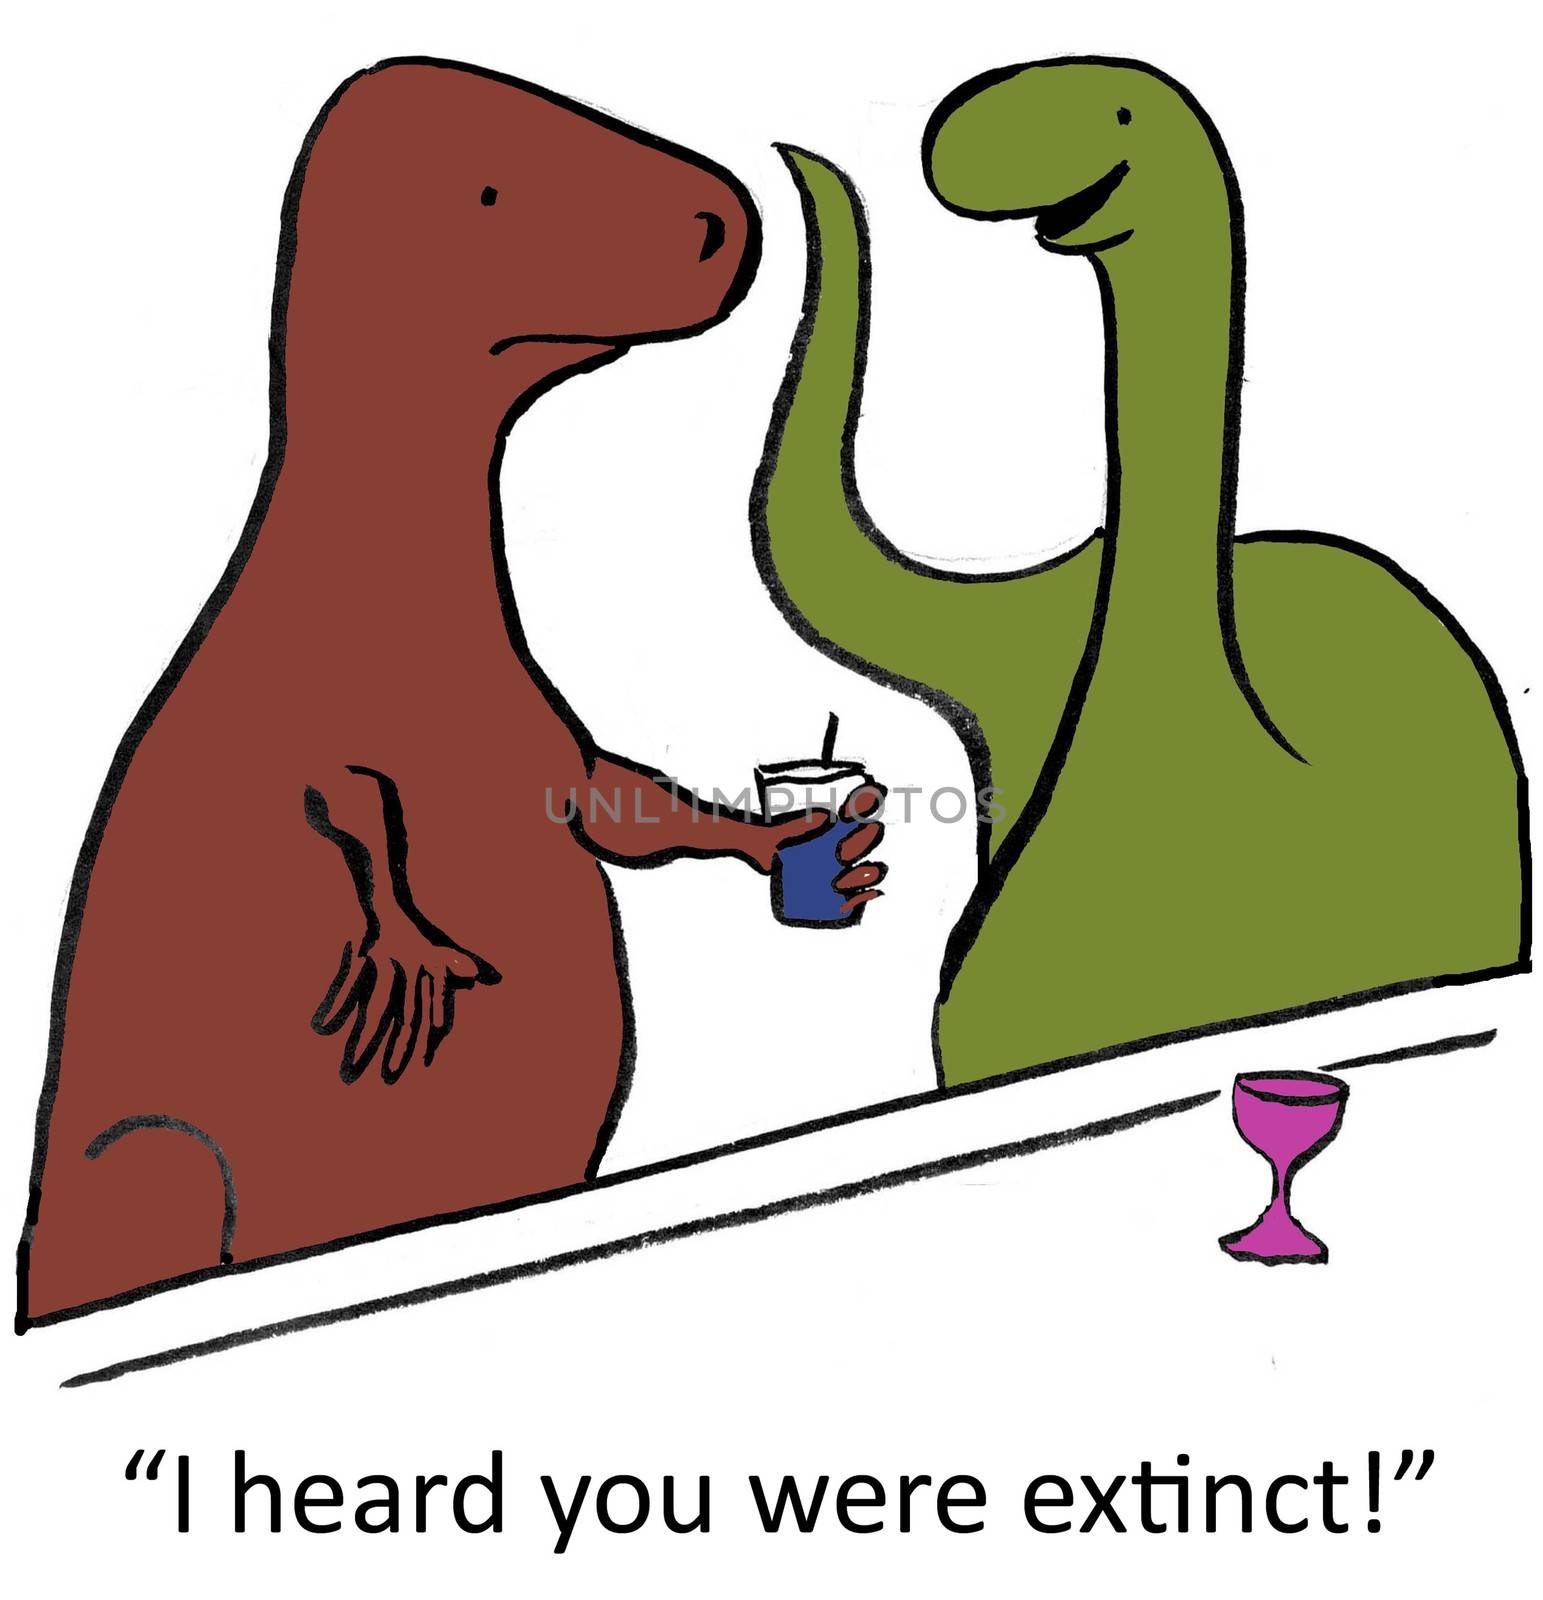 "Man, I heard you were extinct!"